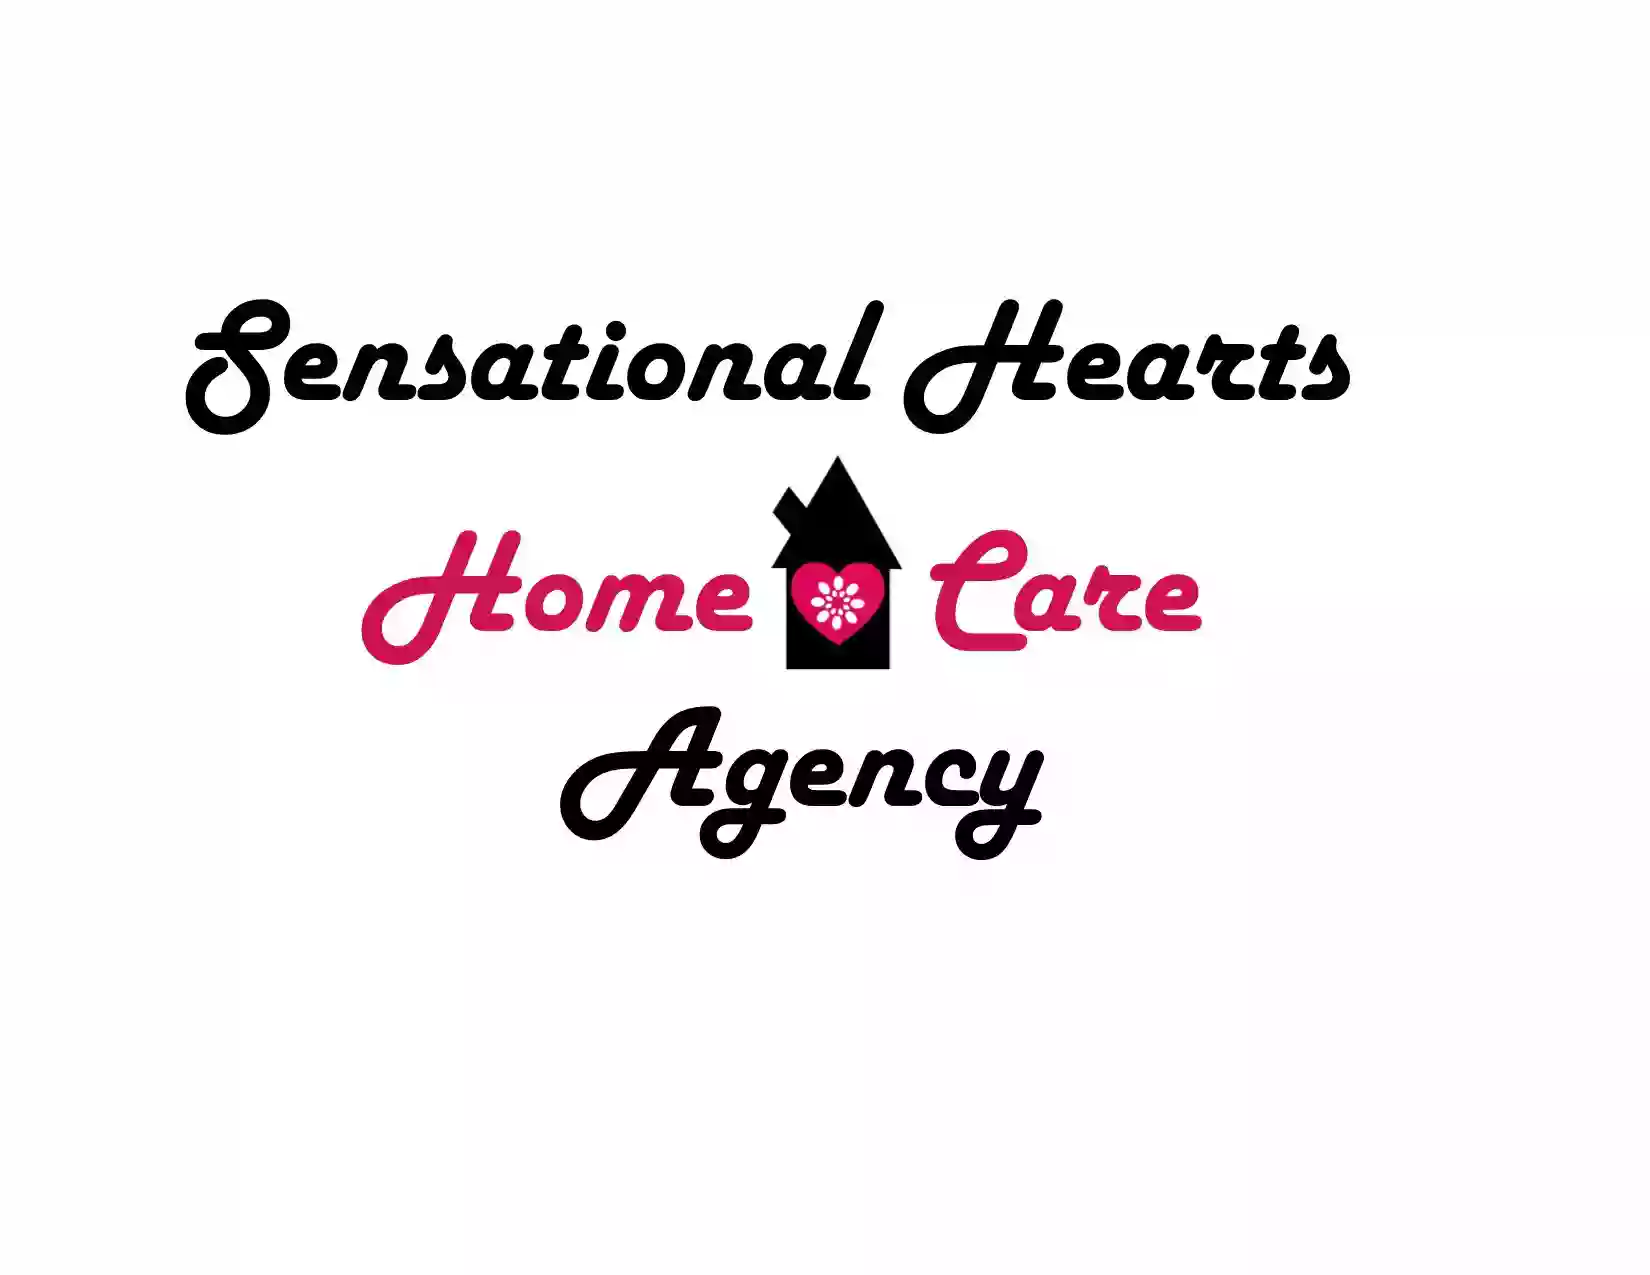 Sensational Hearts Home Care Agency